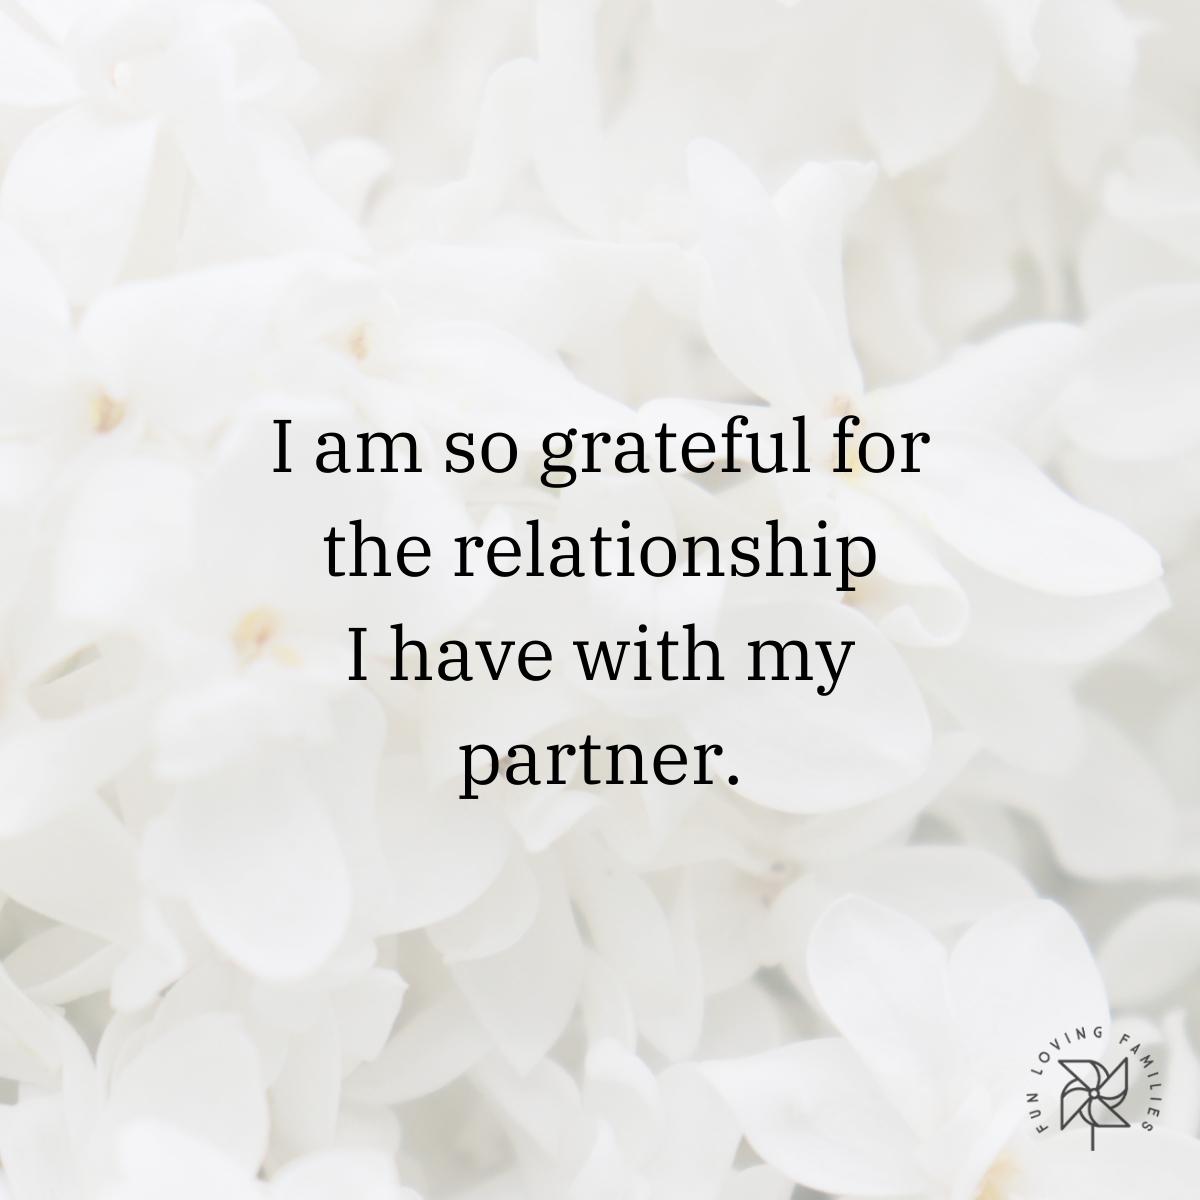 I am so grateful for the relationship I have with my partner affirmation